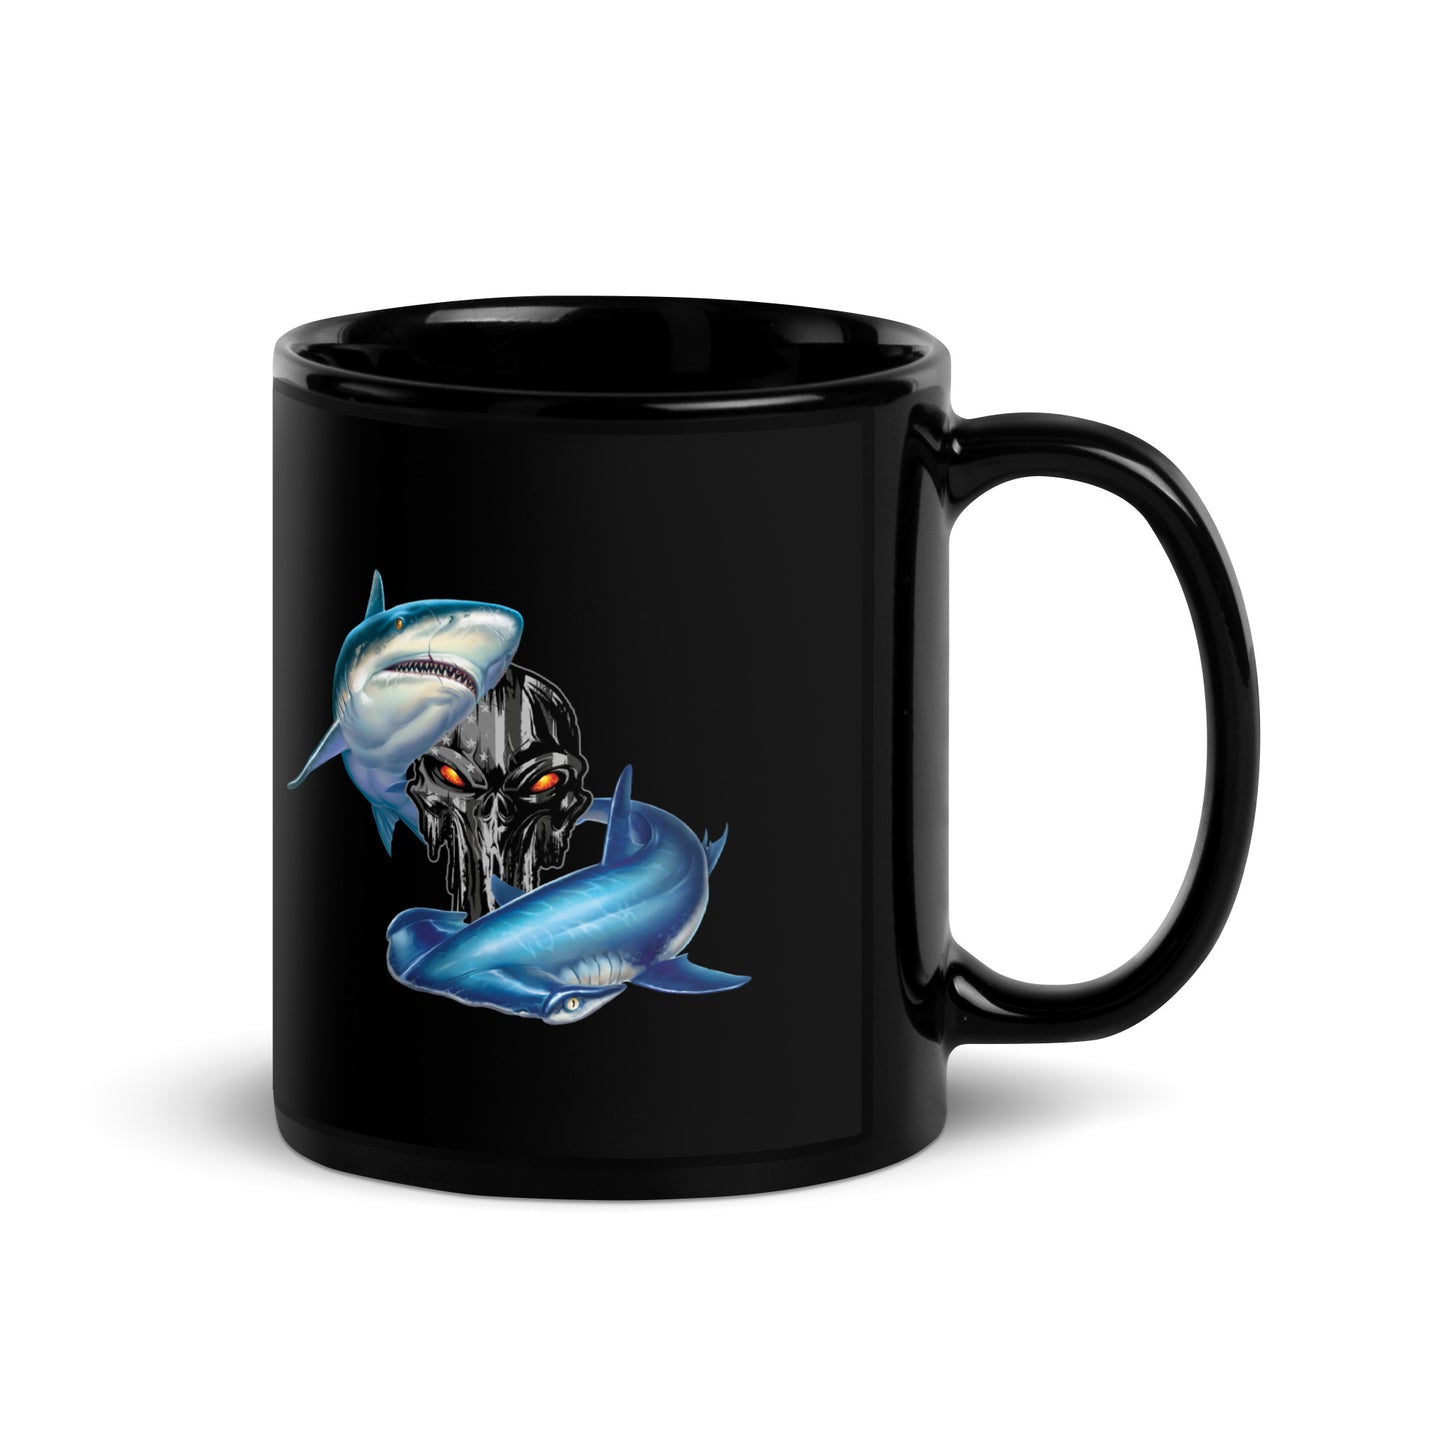 Punisher Shark Anchor Coffee Mug